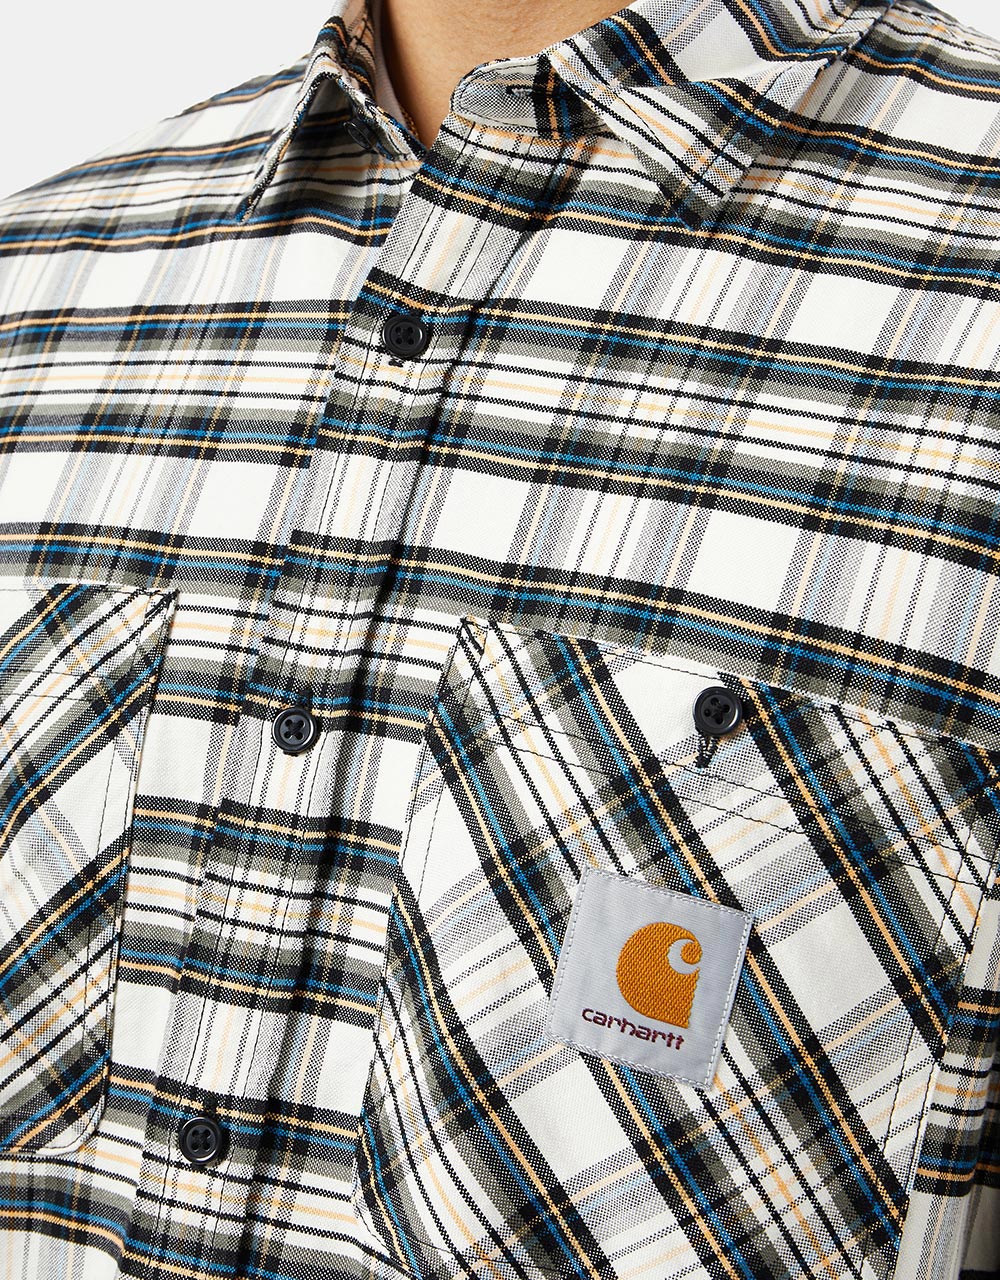 Carhartt WIP L/S Solander Shirt - Solander Check/Wax